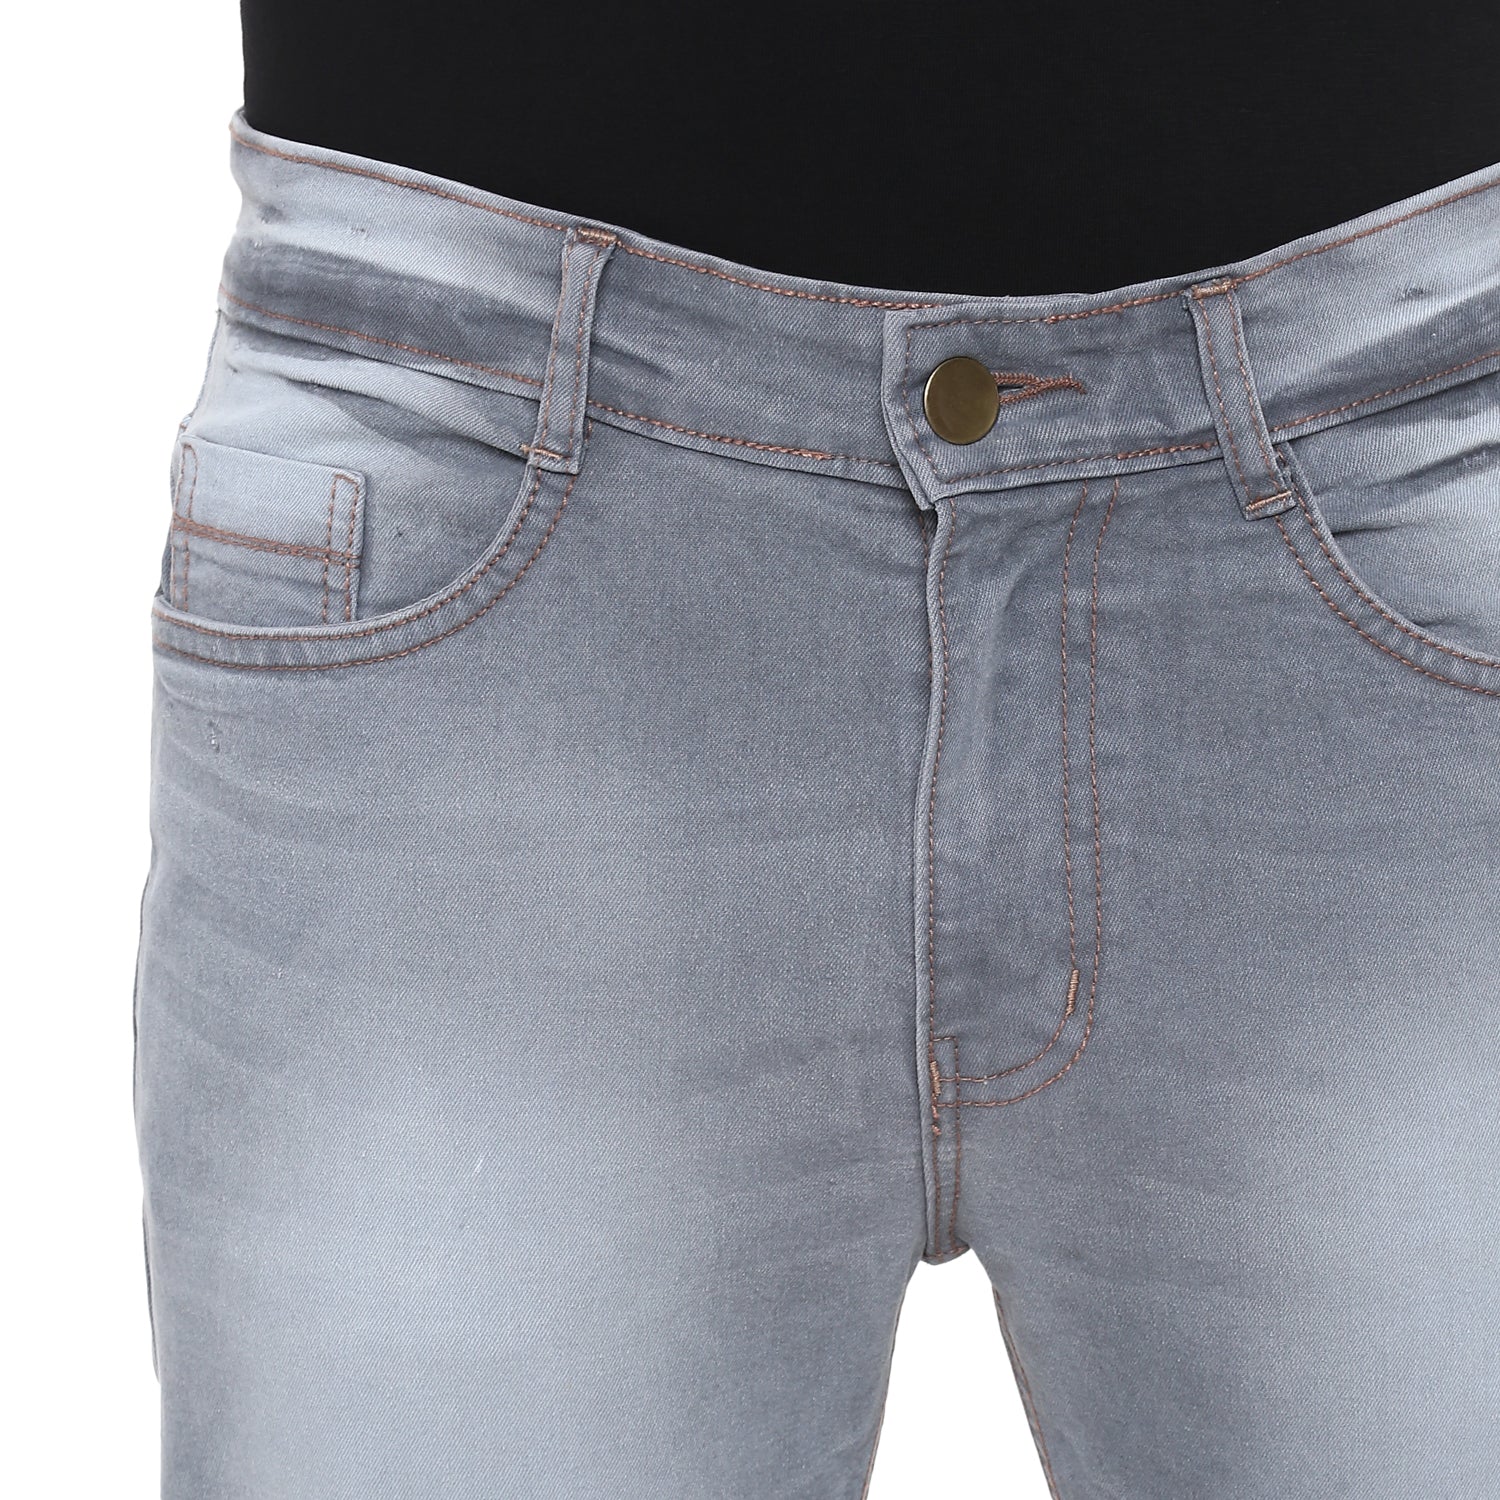 Urbano Fashion Men's Grey Slim Fit Zippered Jeans Stretch